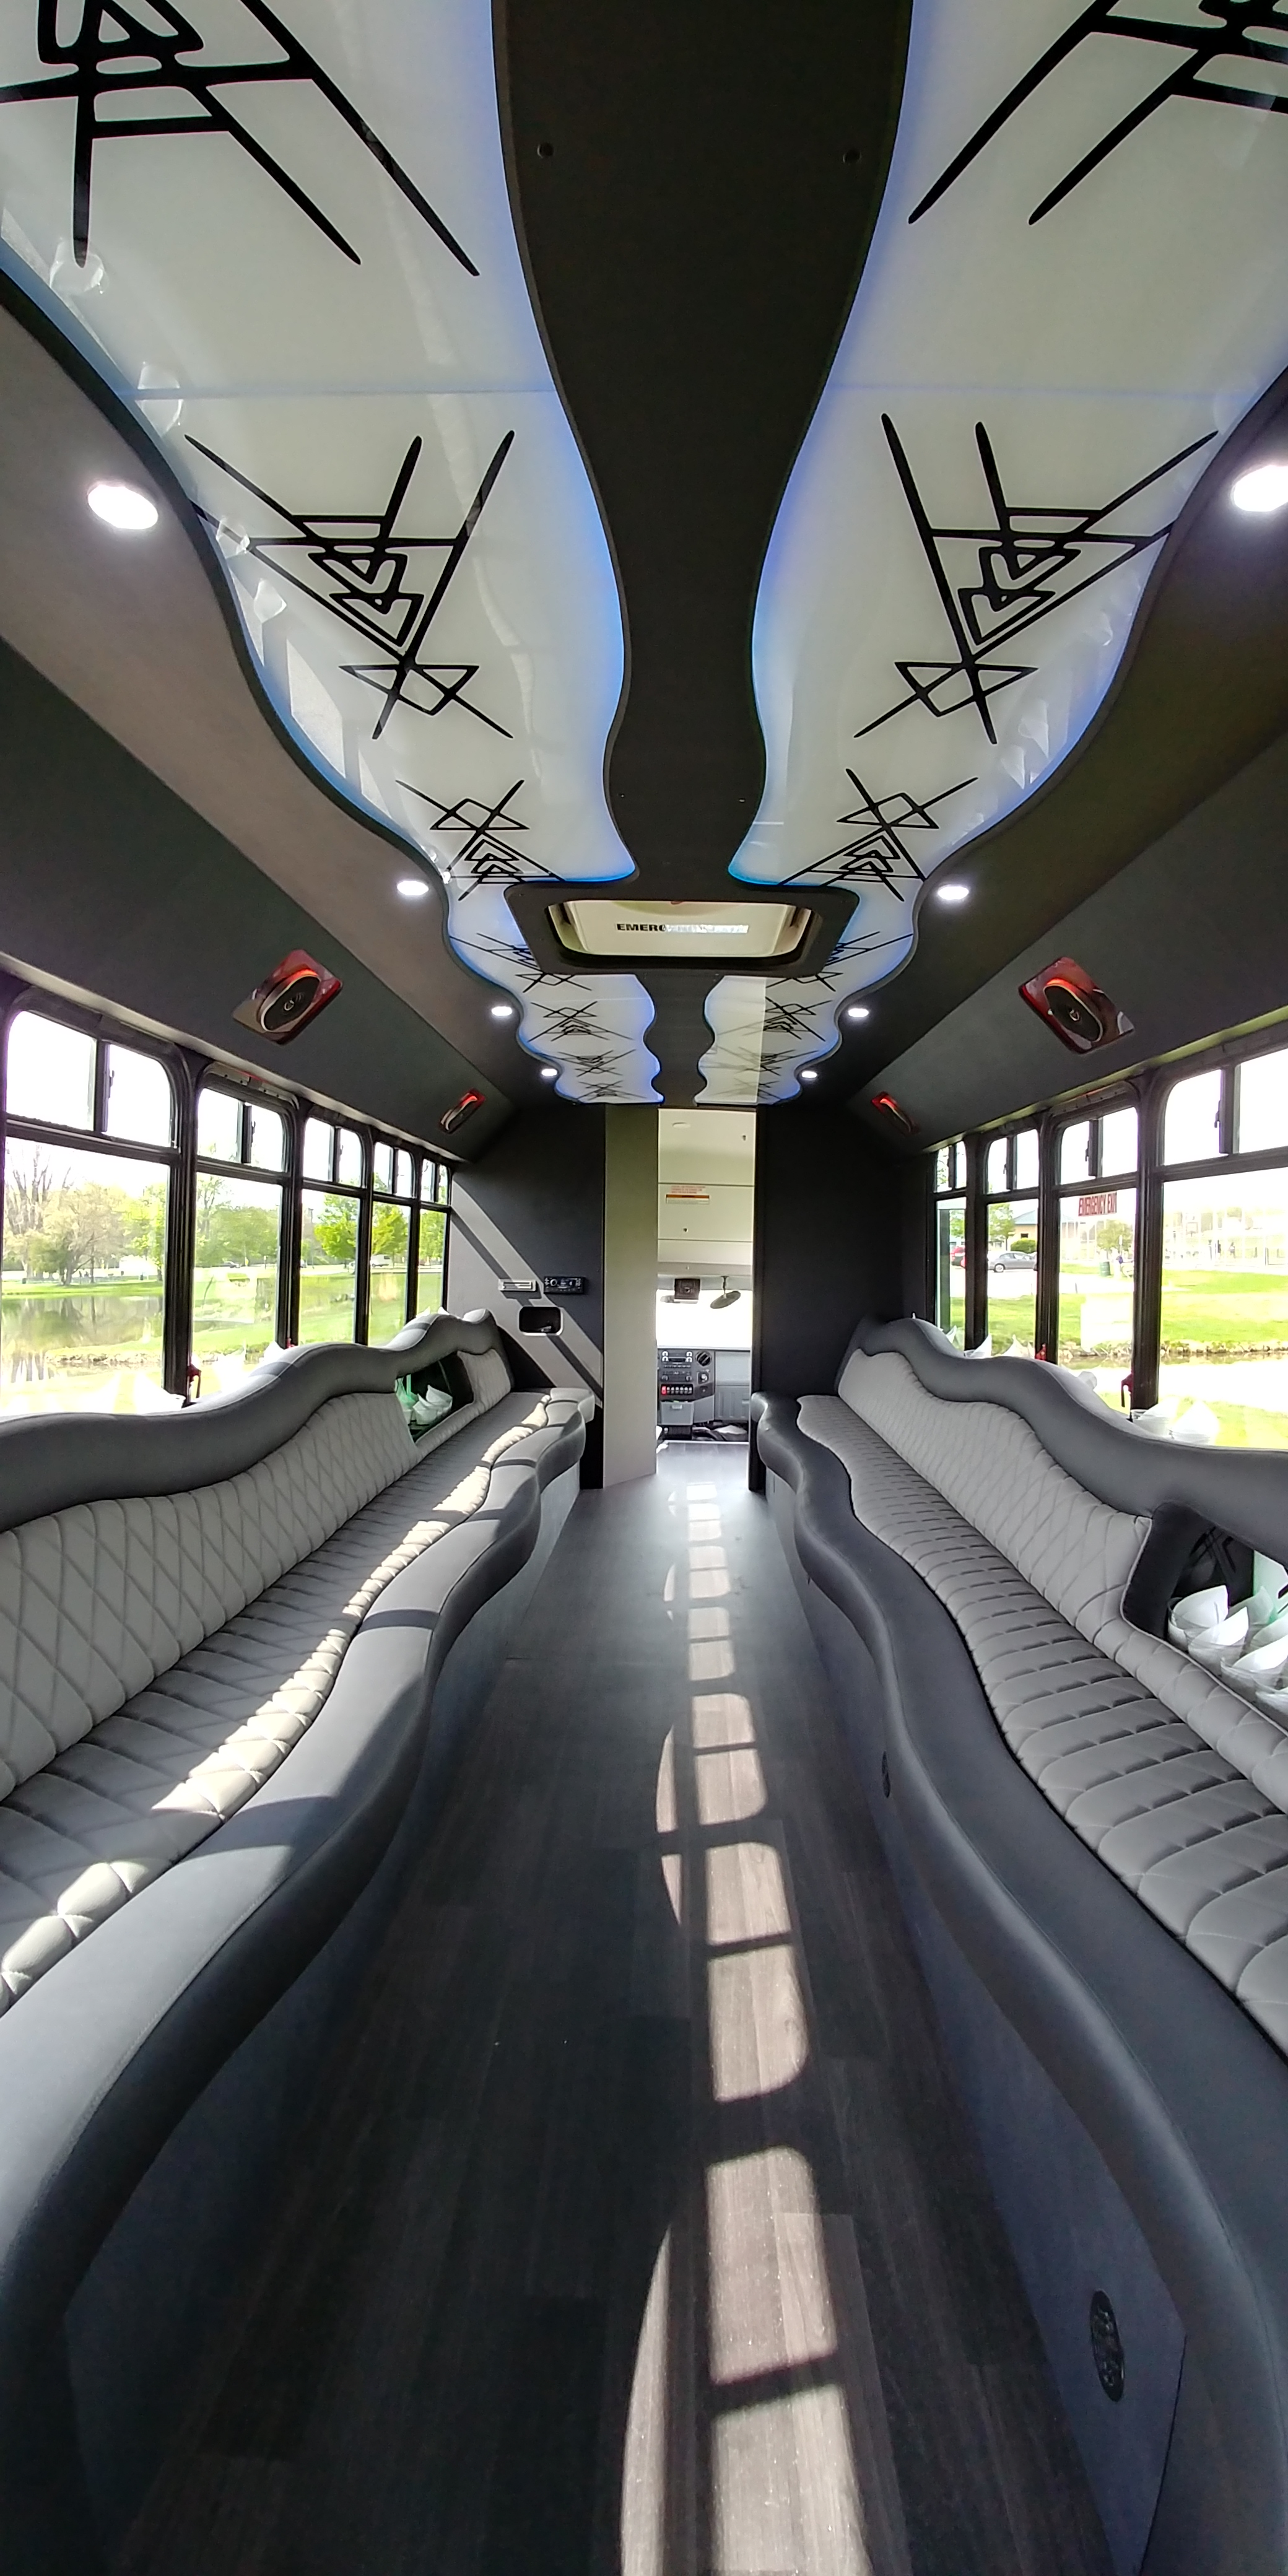 28 Passenger Luxury Limo Bus Interior 6